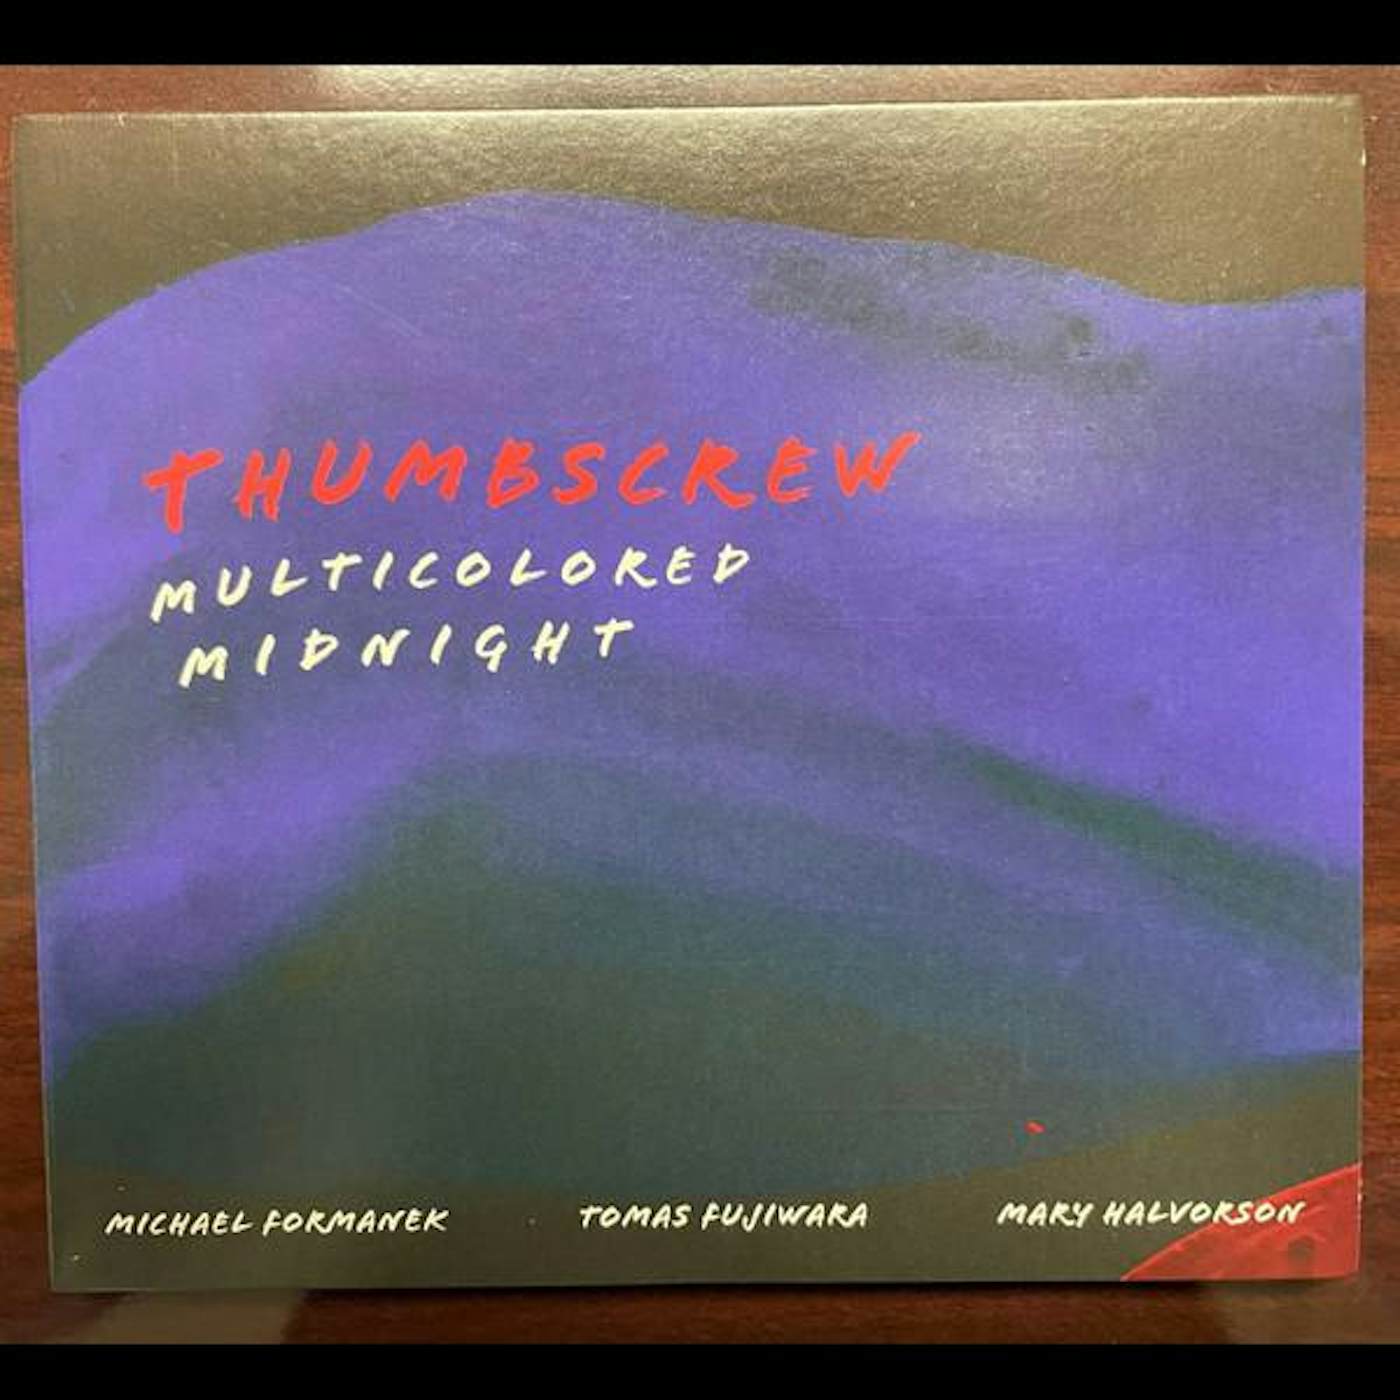 Thumbscrew MULTICOLORED MIDNIGHT CD